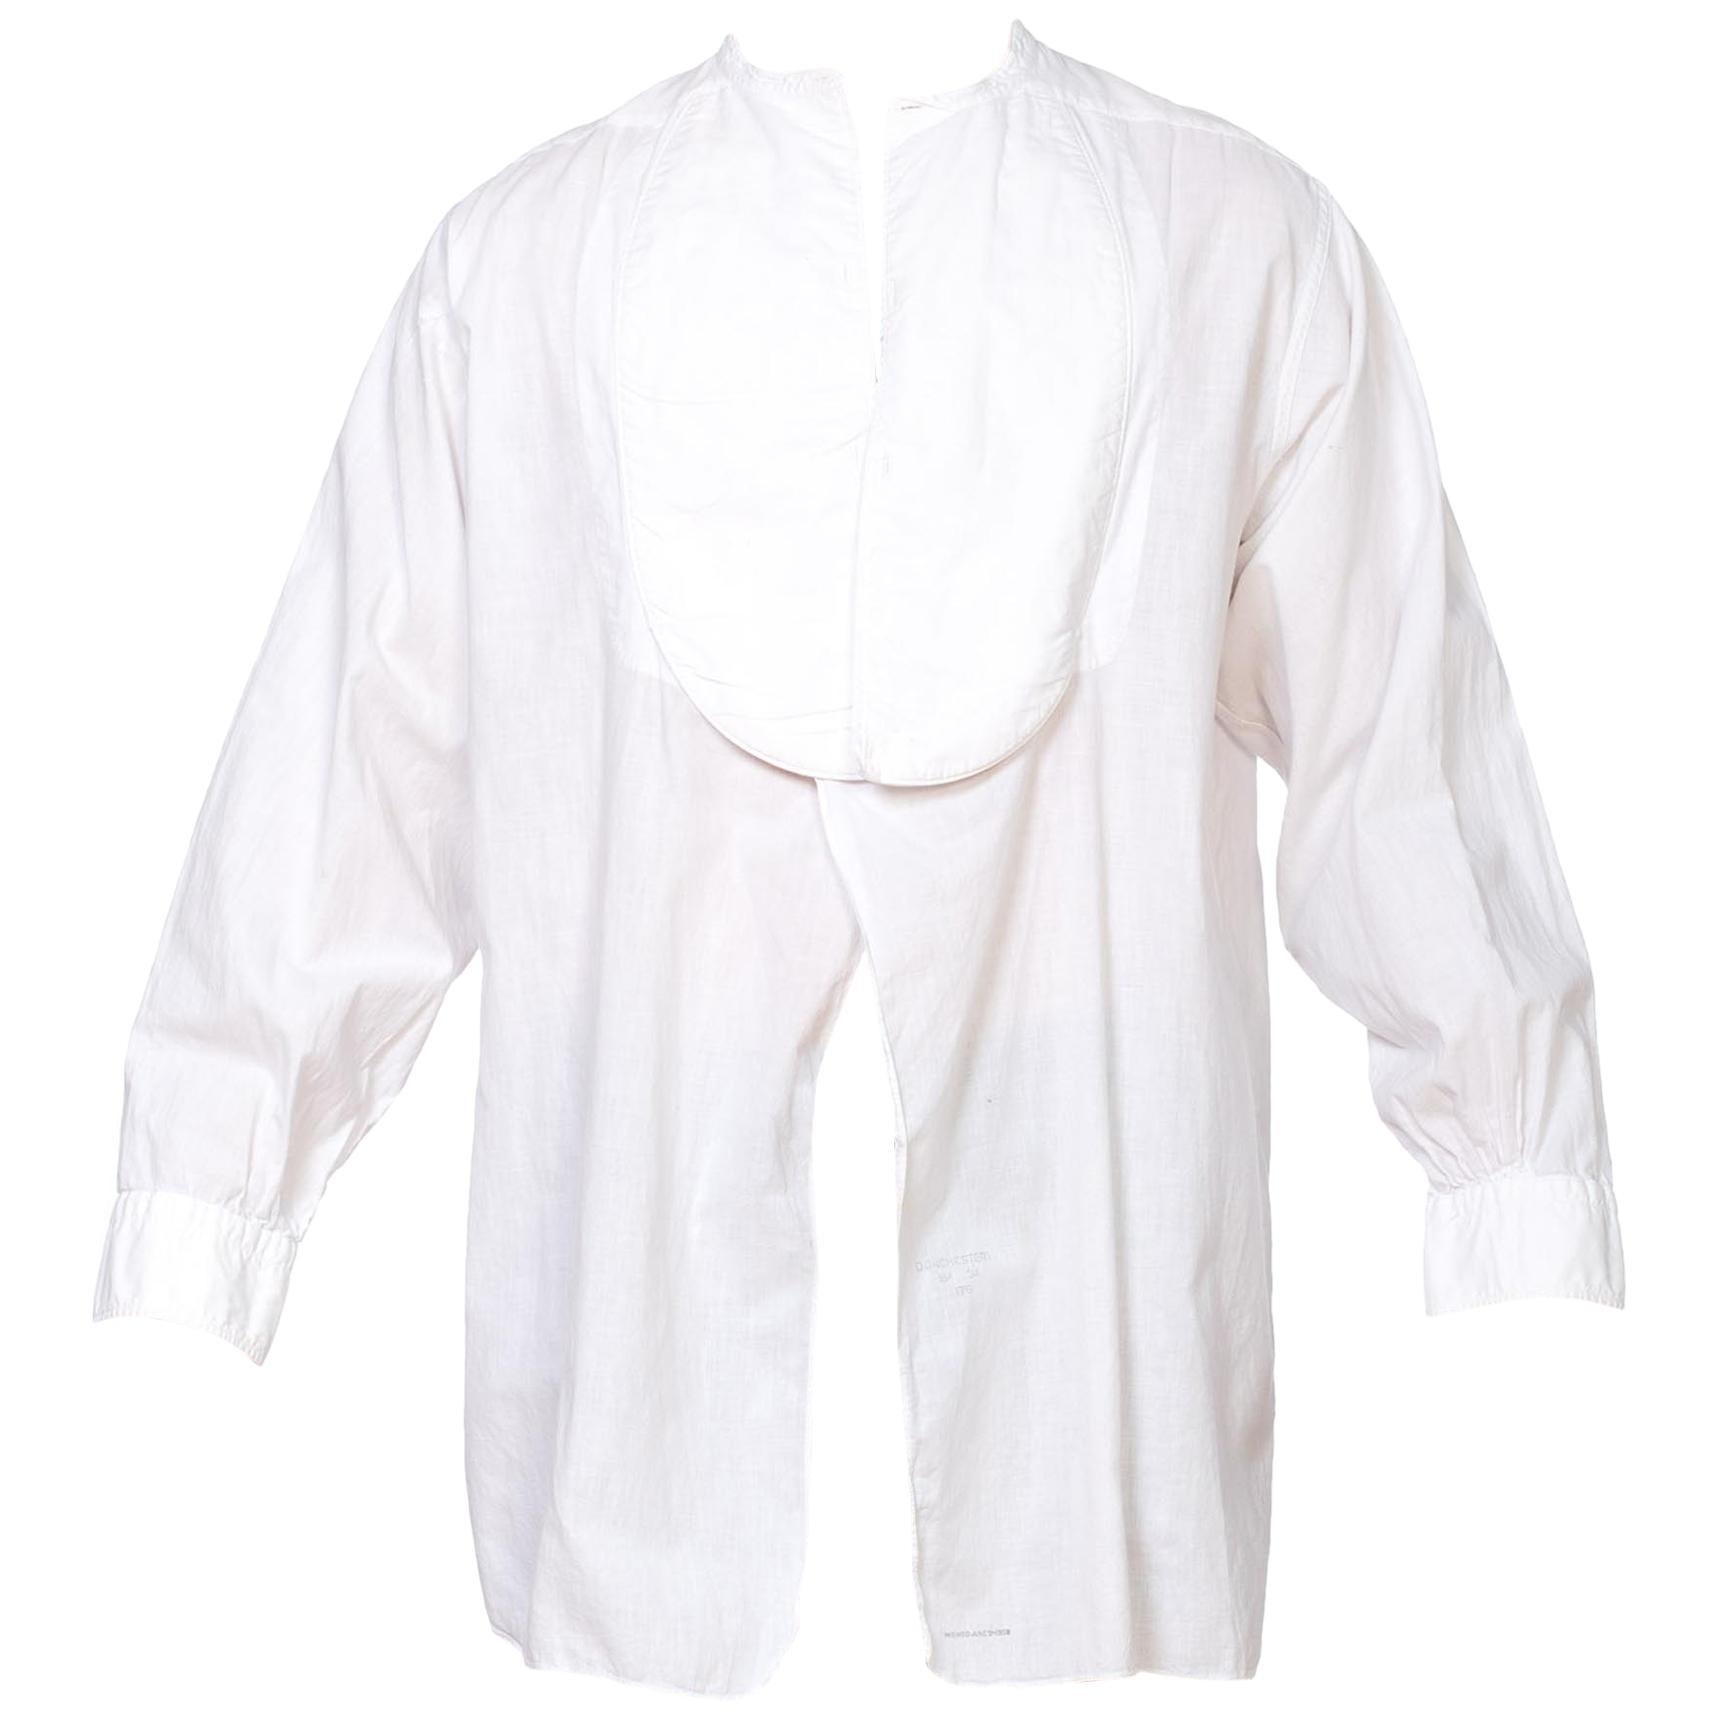 1900S White Cotton Men's Formal Bib Front Shirt By Arrow For Sale